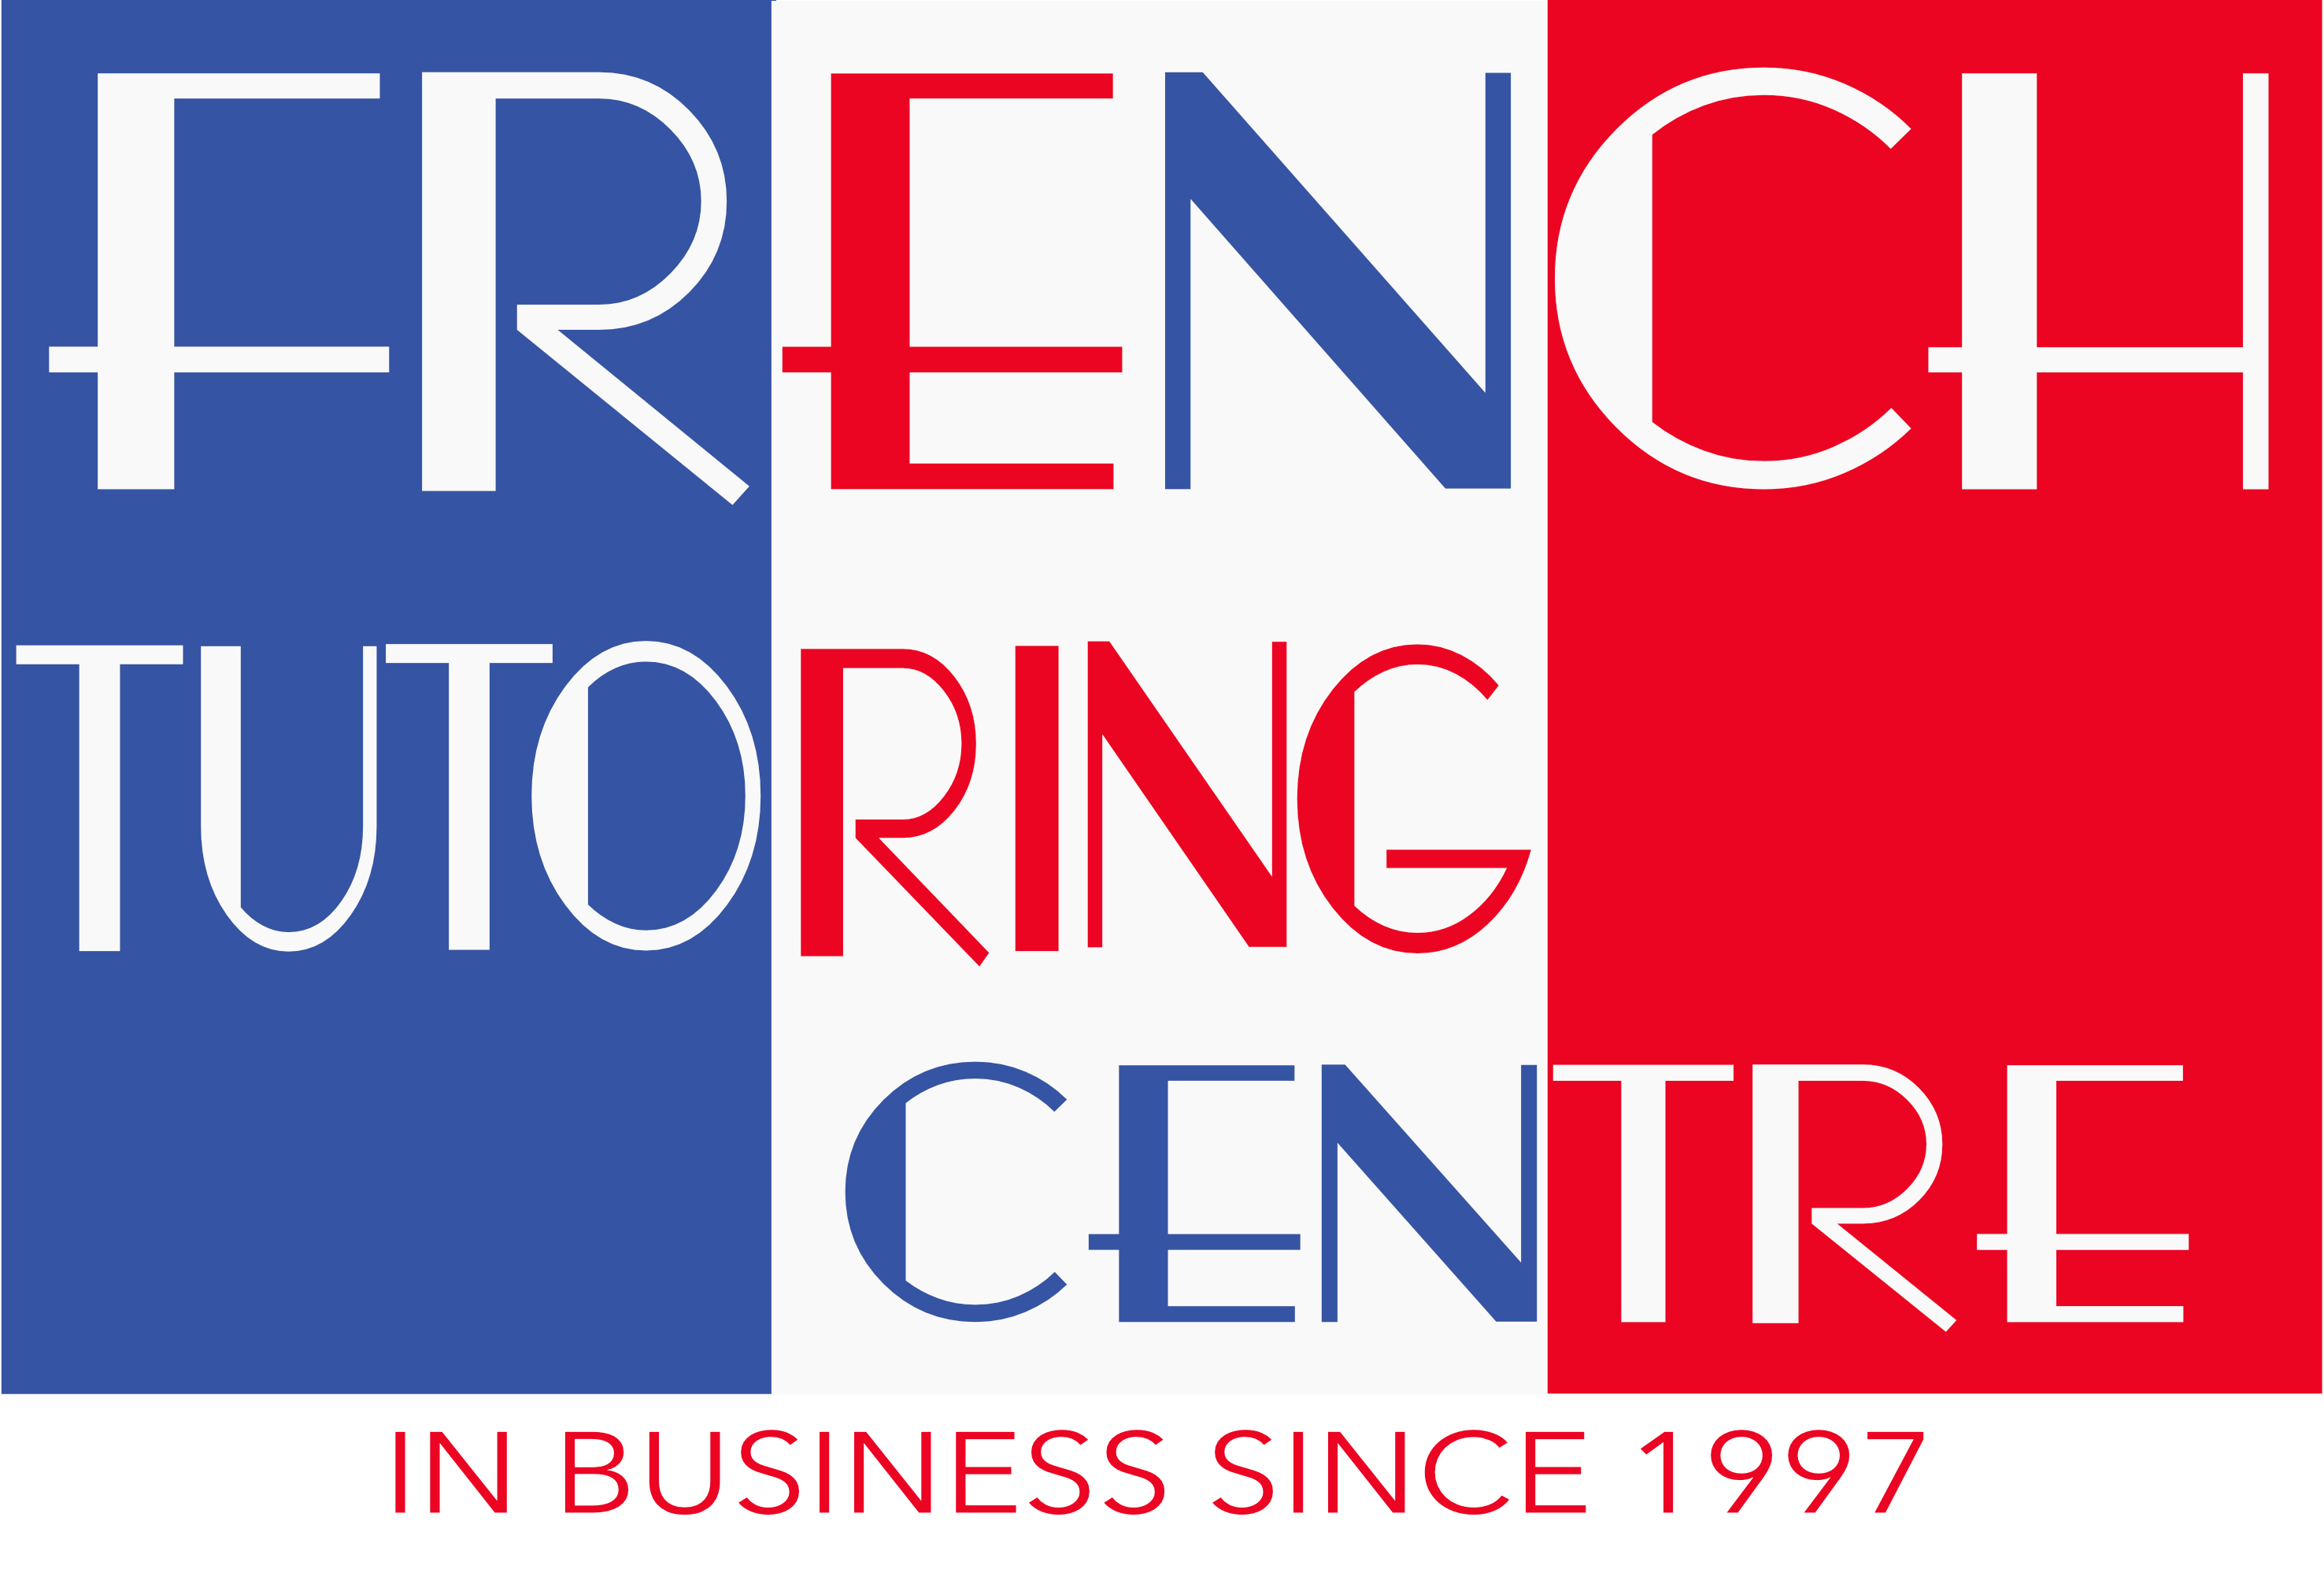 French Tutoring Center Logo